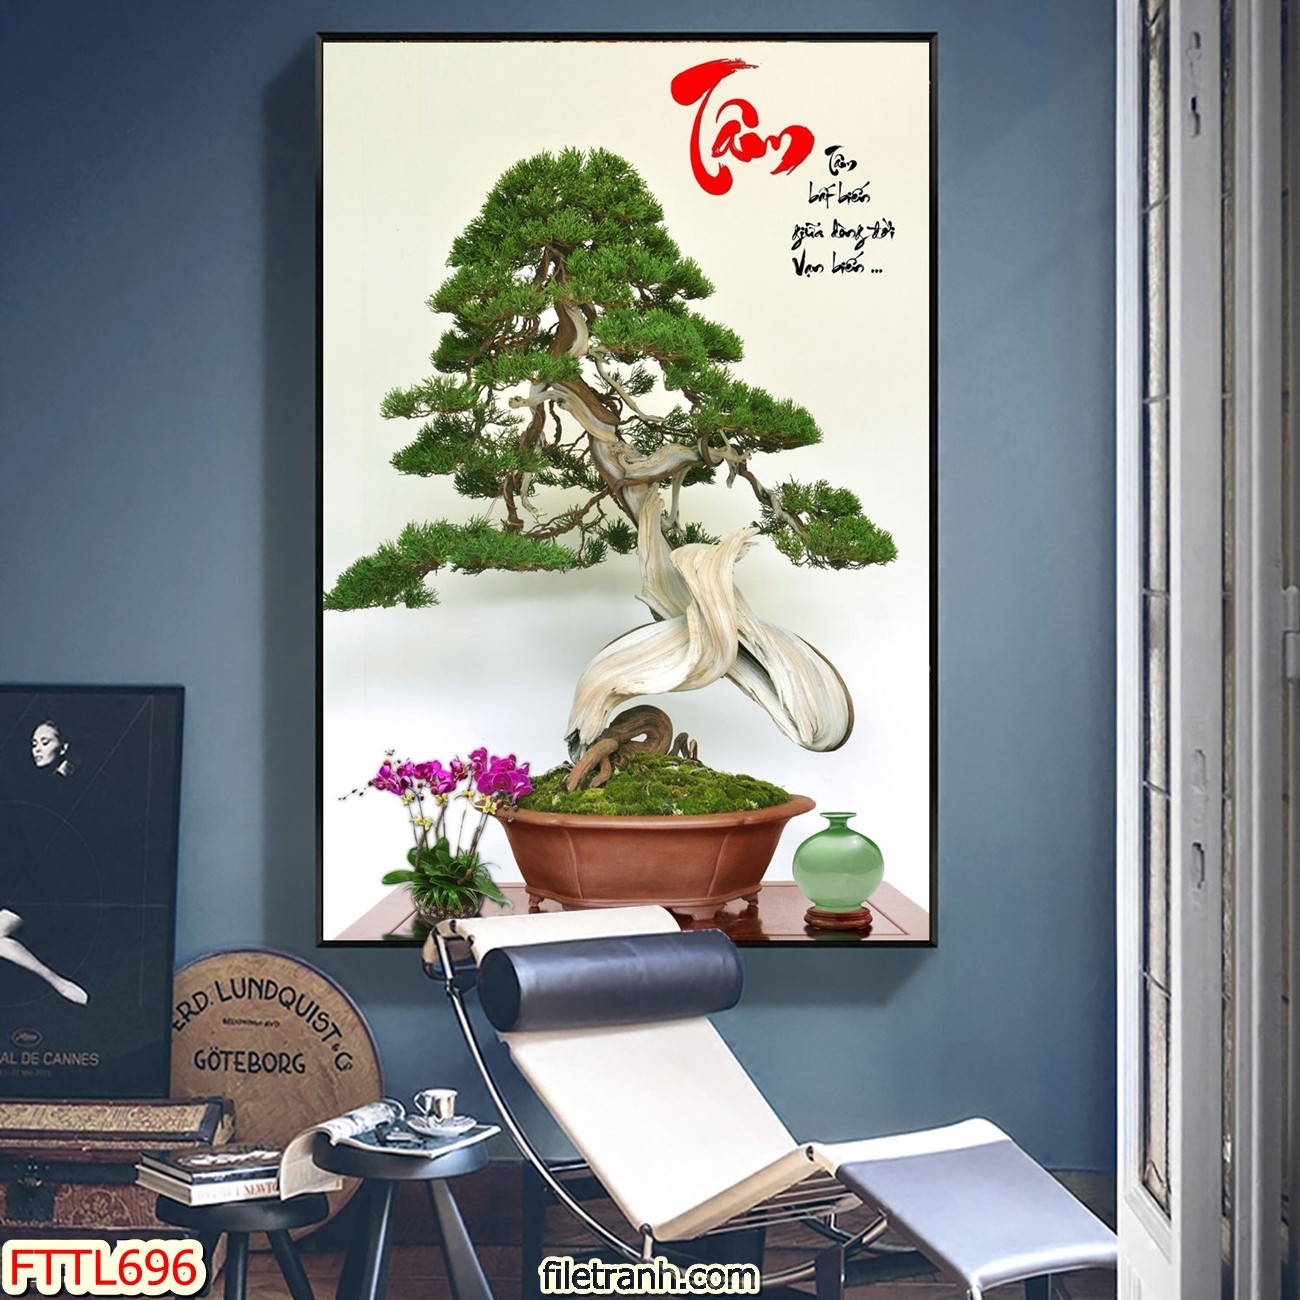 https://filetranh.com/file-tranh-chau-mai-bonsai/file-tranh-chau-mai-bonsai-fttl696.html